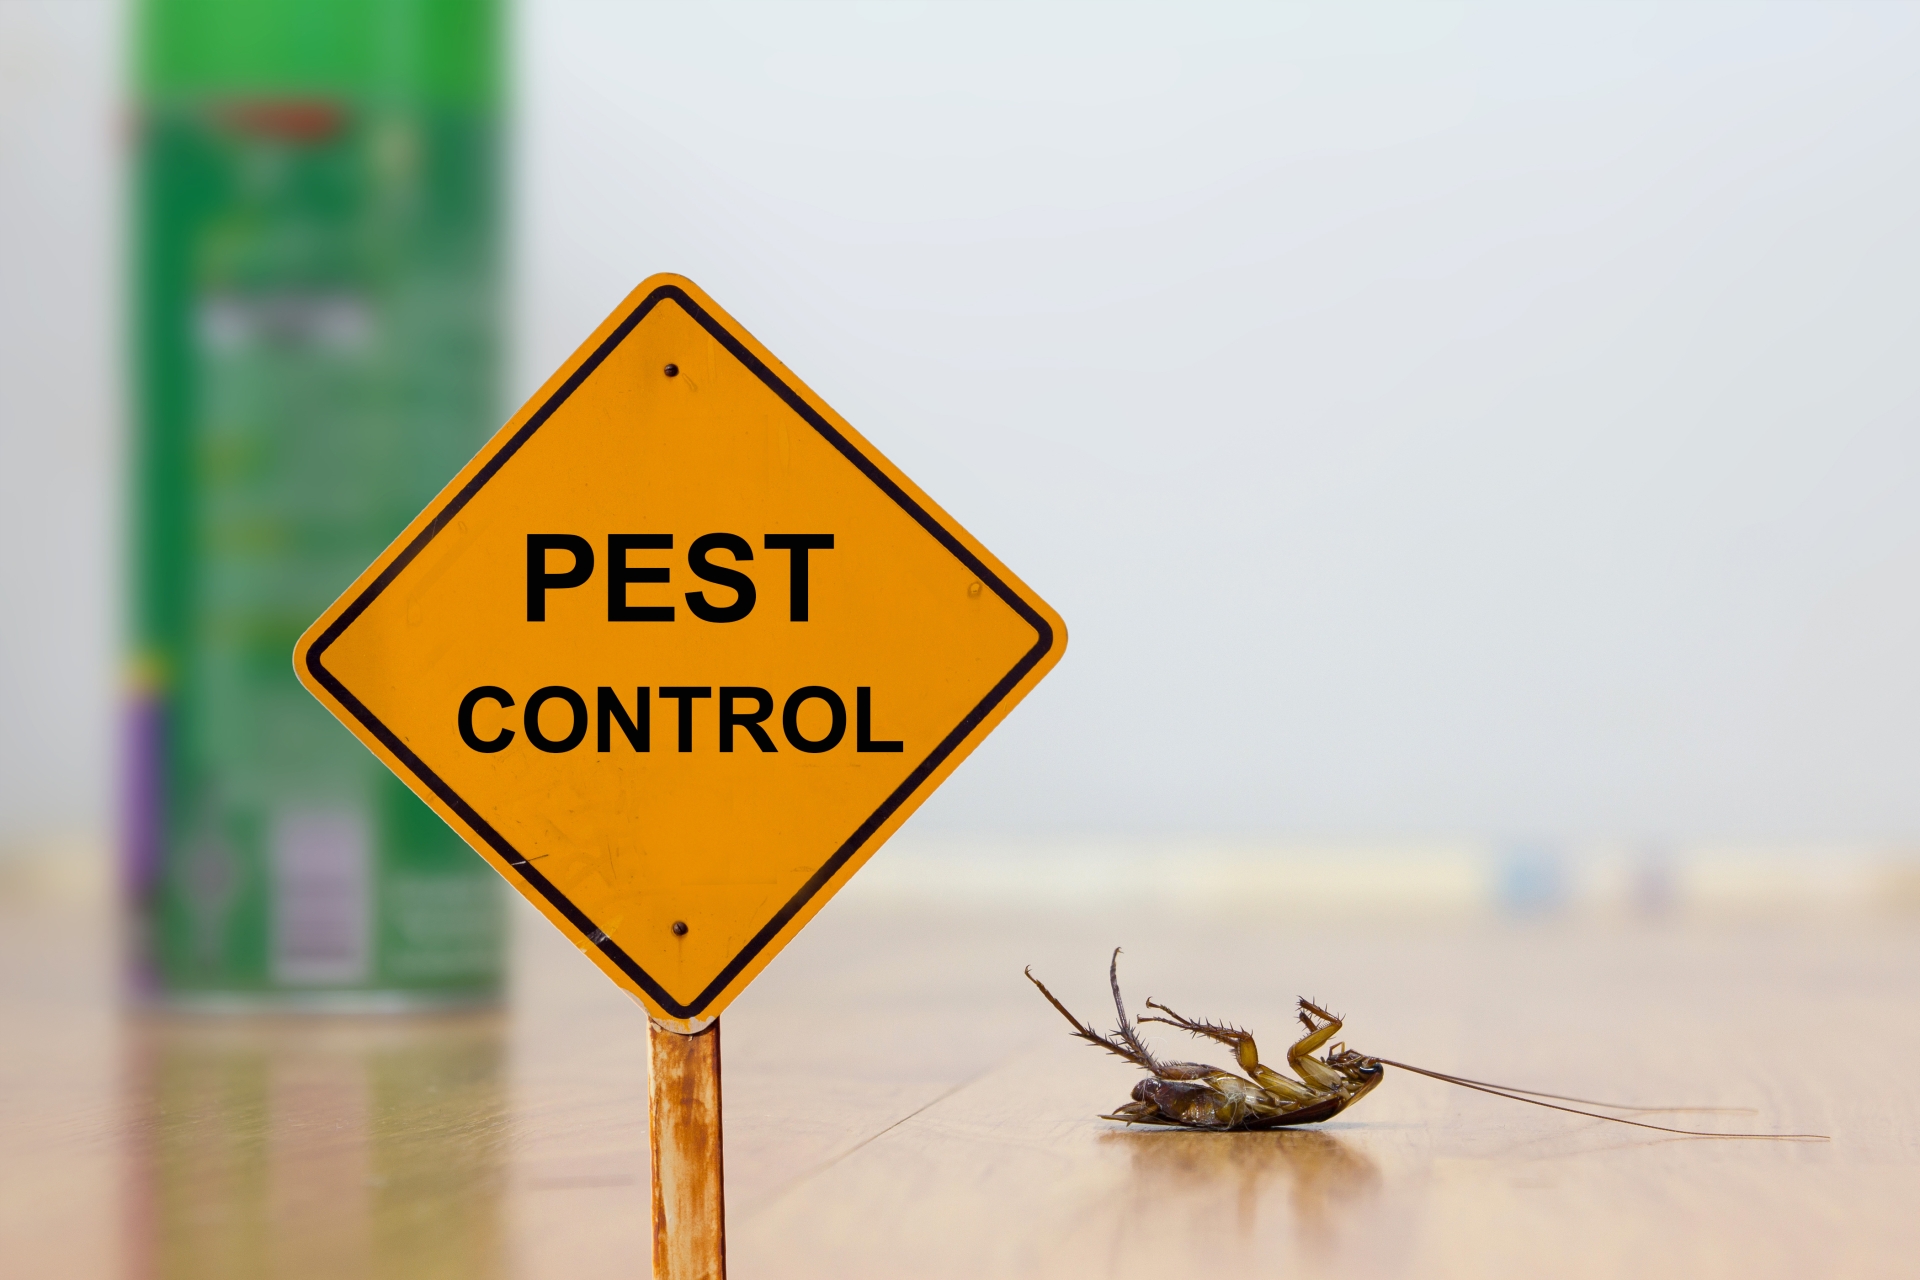 24 Hour Pest Control, Pest Control in West Kensington, W14. Call Now 020 8166 9746